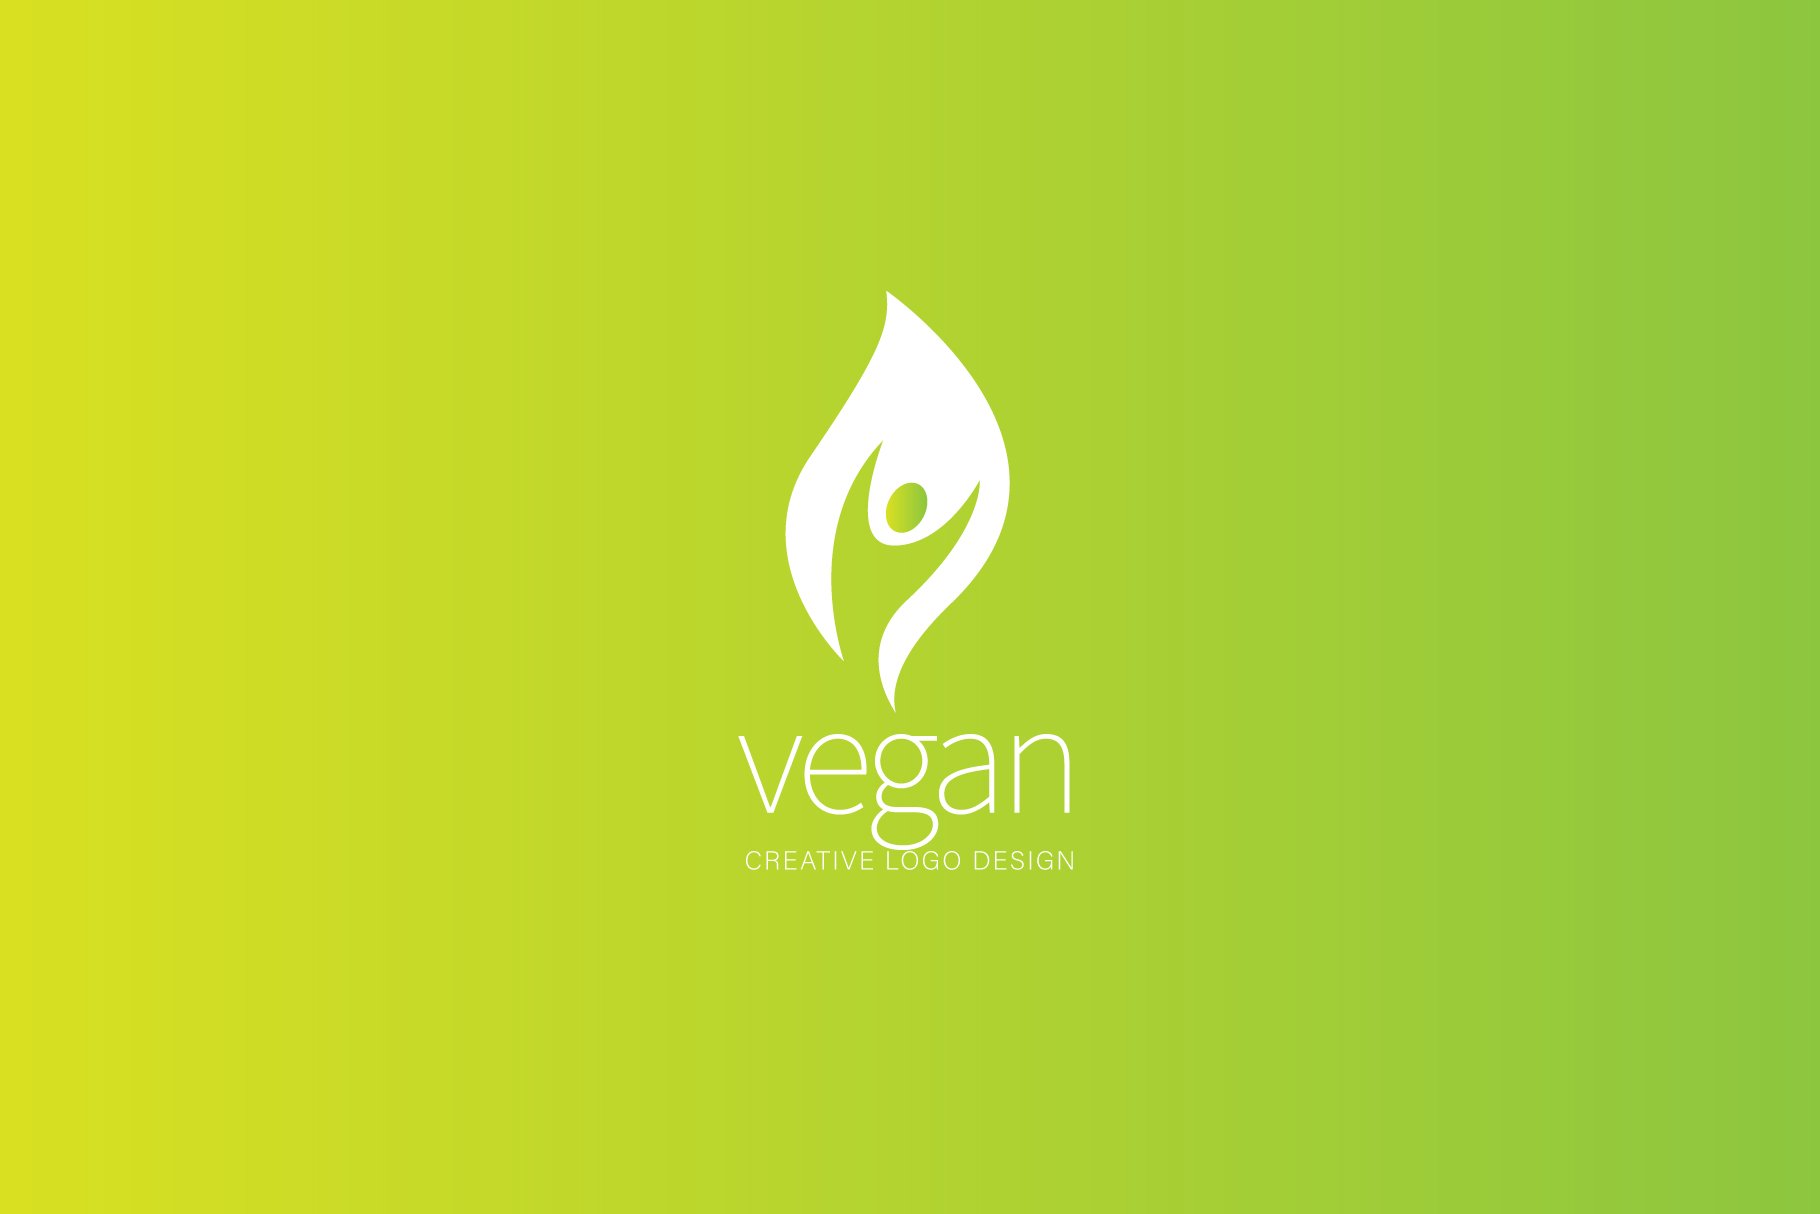 vegan logo preview image.